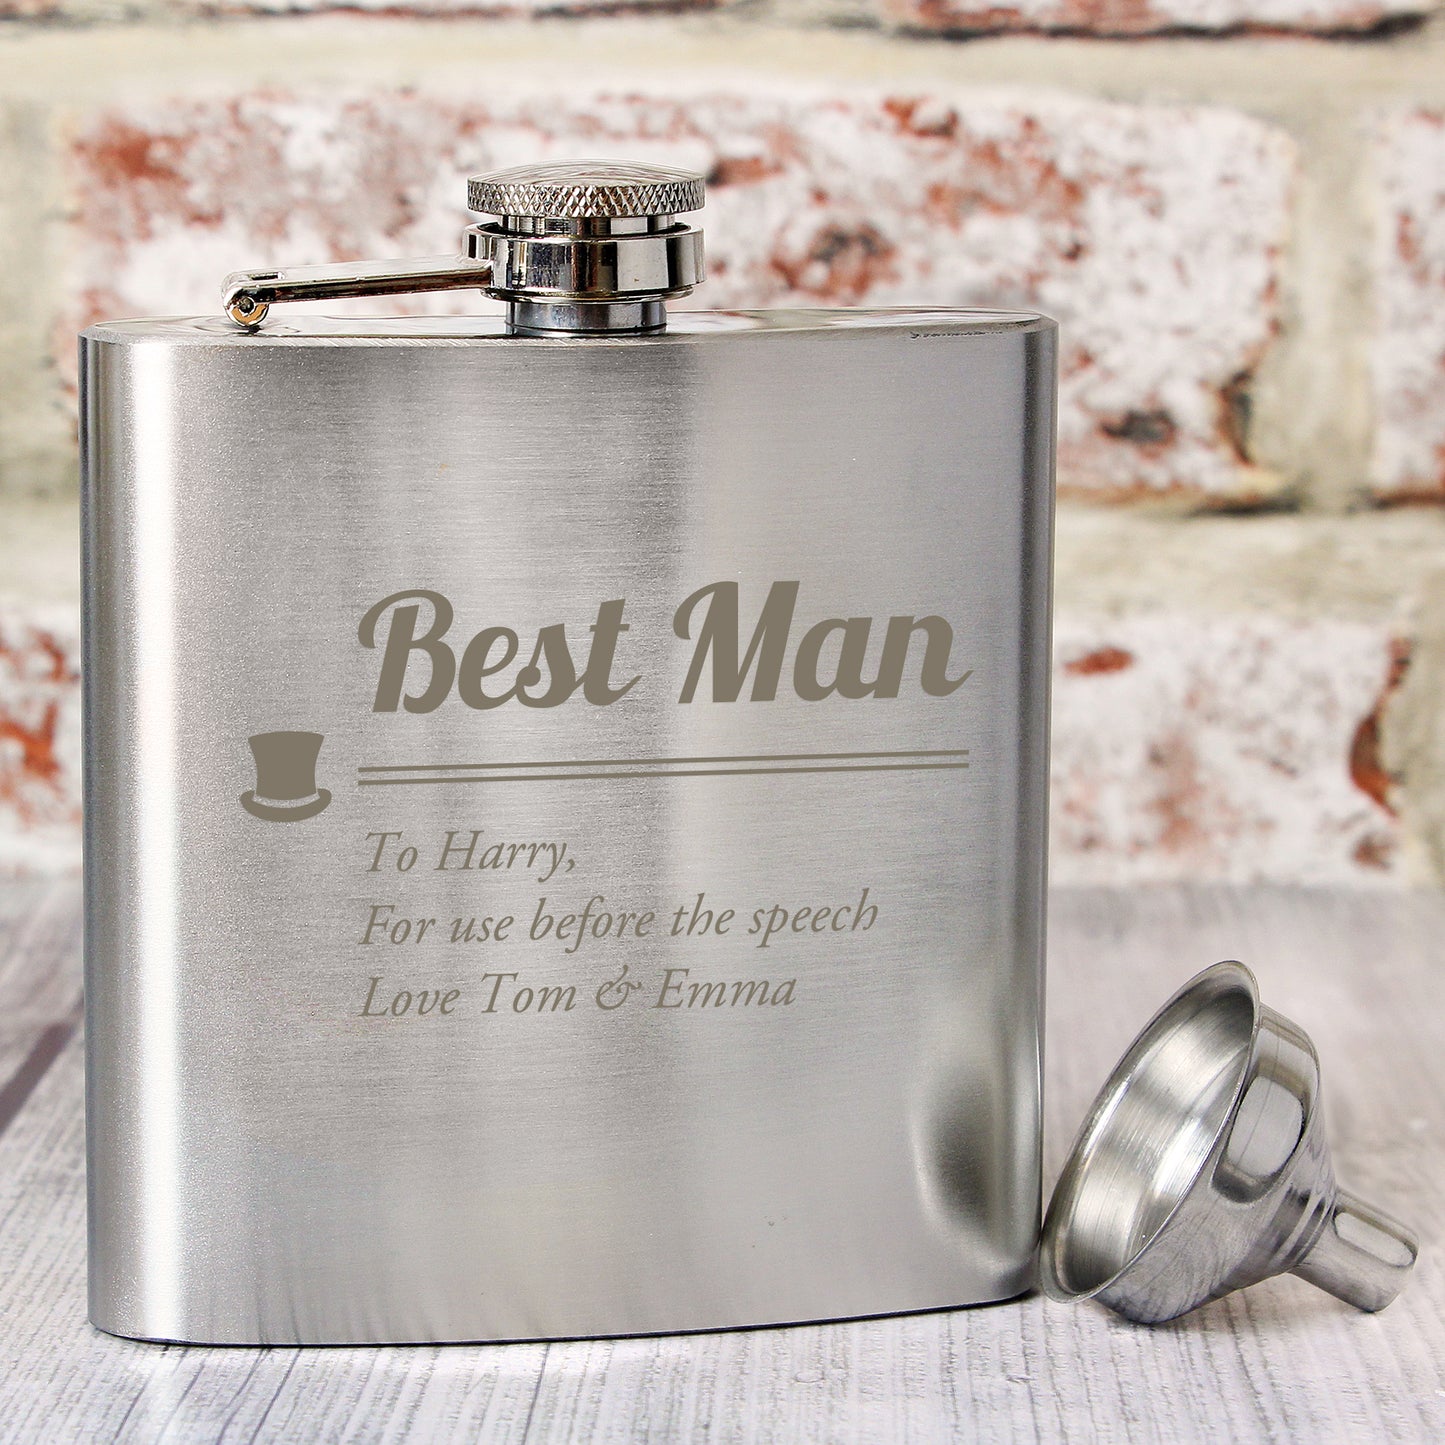 Personalised Best Man Hip Flask - Personalise It!